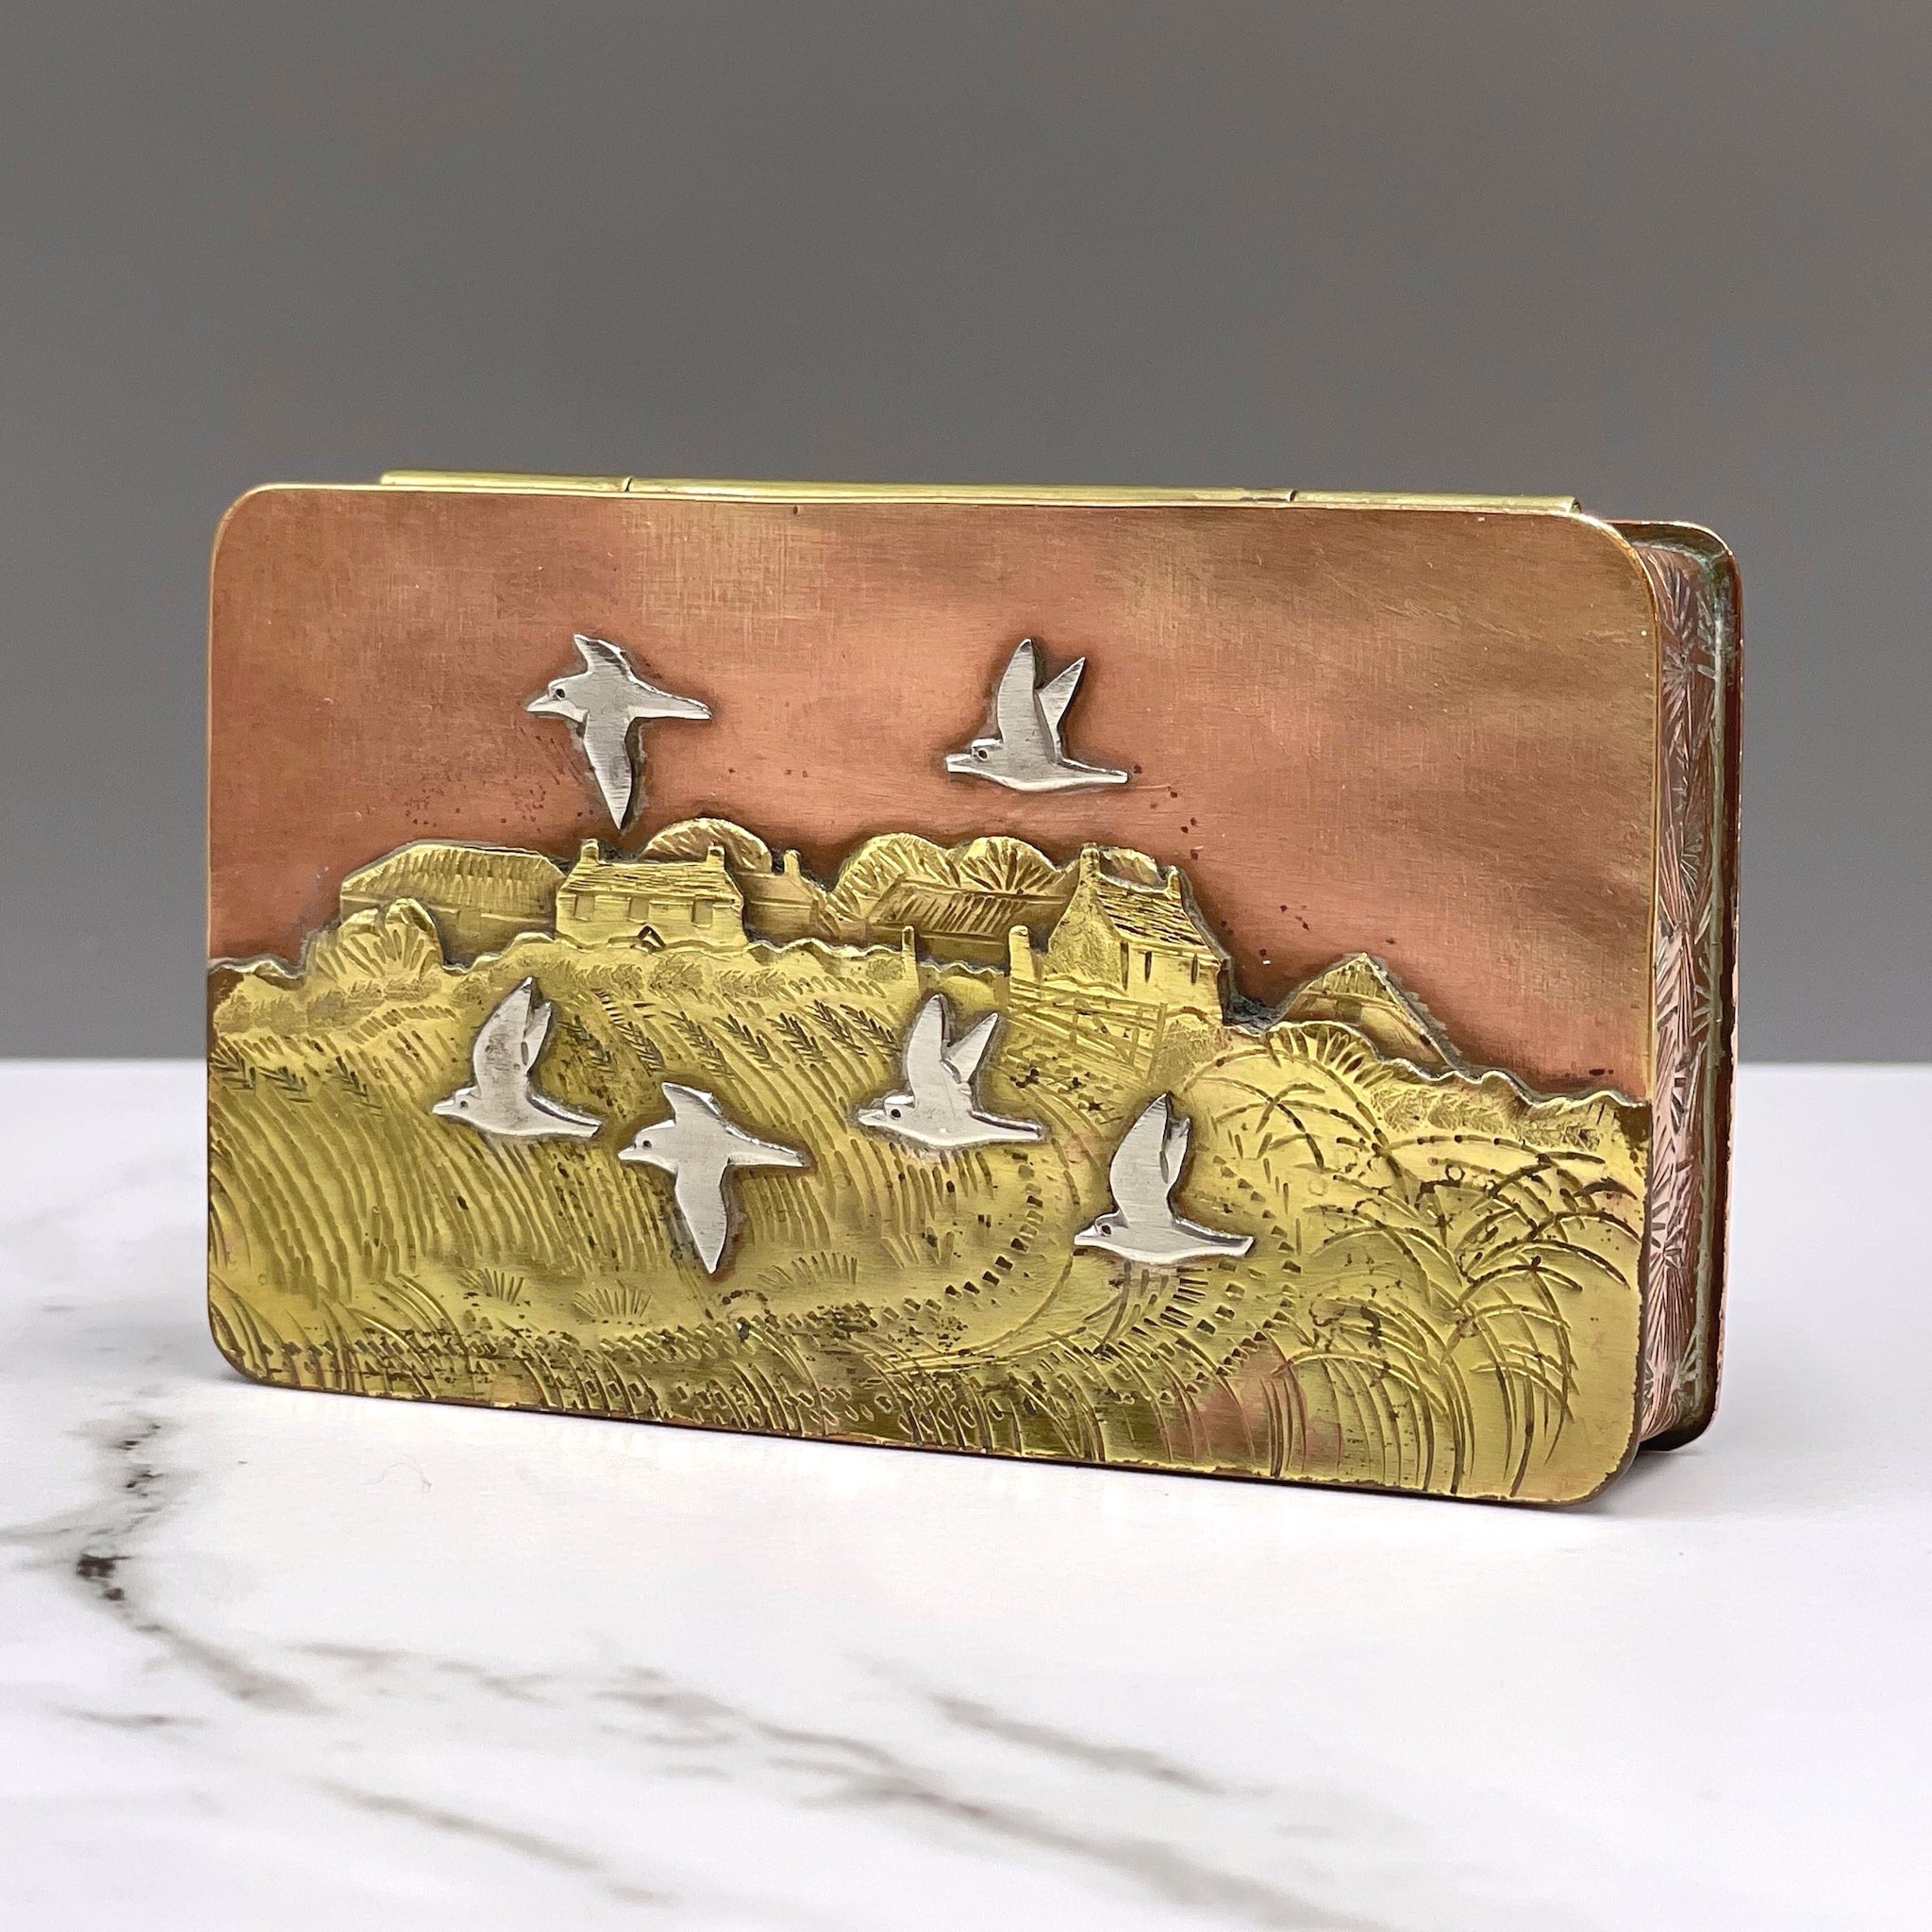 Metal hinged box depicting birds flying over a wheat field near a farmhouse by artist Cornelius Van Dop